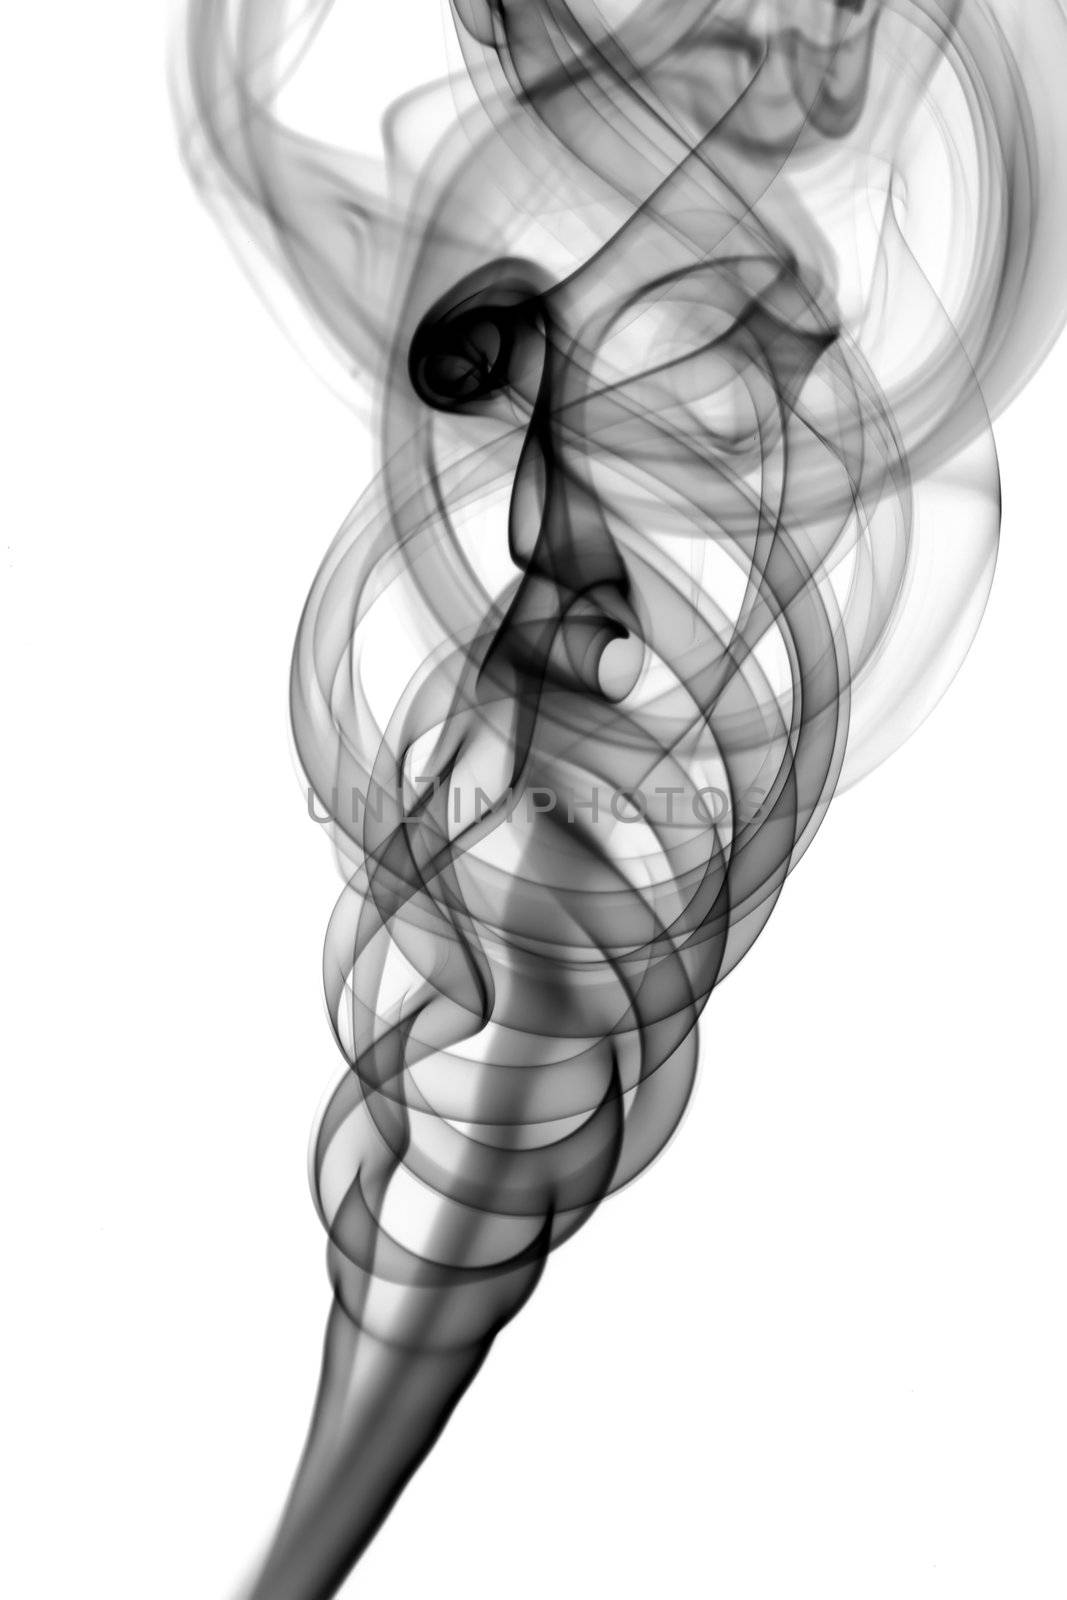 Abstract black smoke swirl by Arsgera